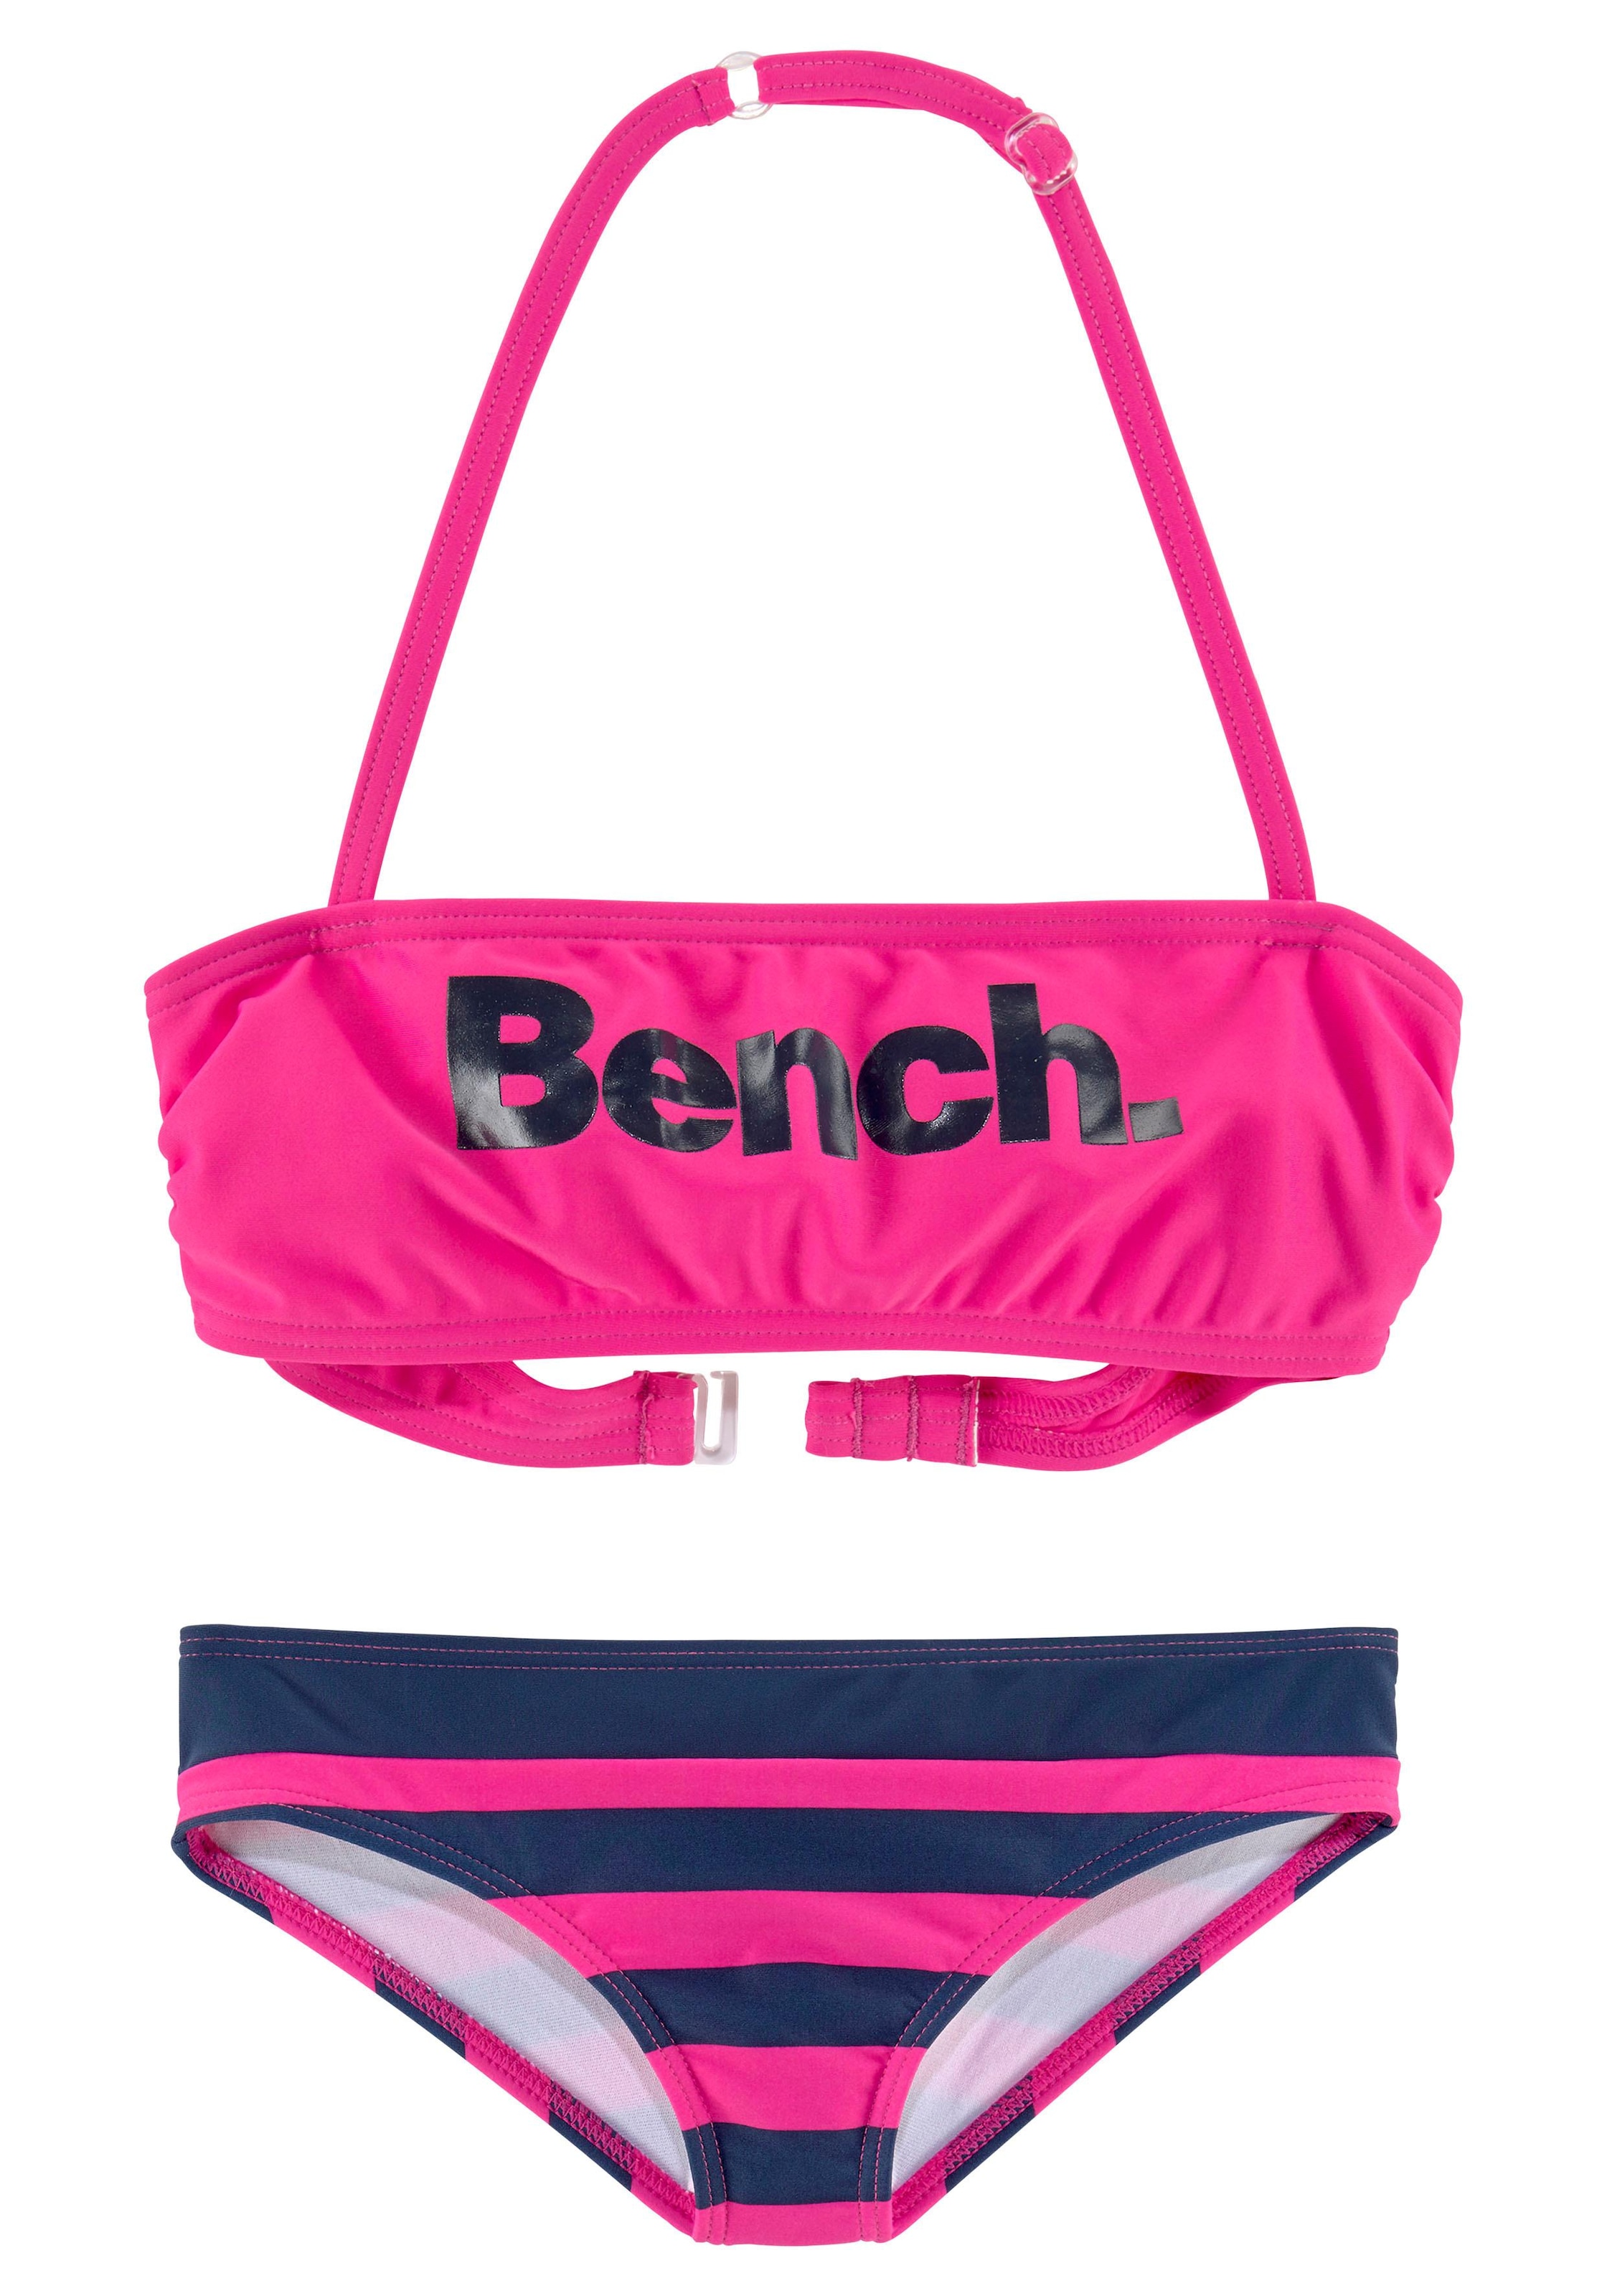 Bench. Logoprint Bandeau-Bikini, großem Online-Shop kaufen im mit